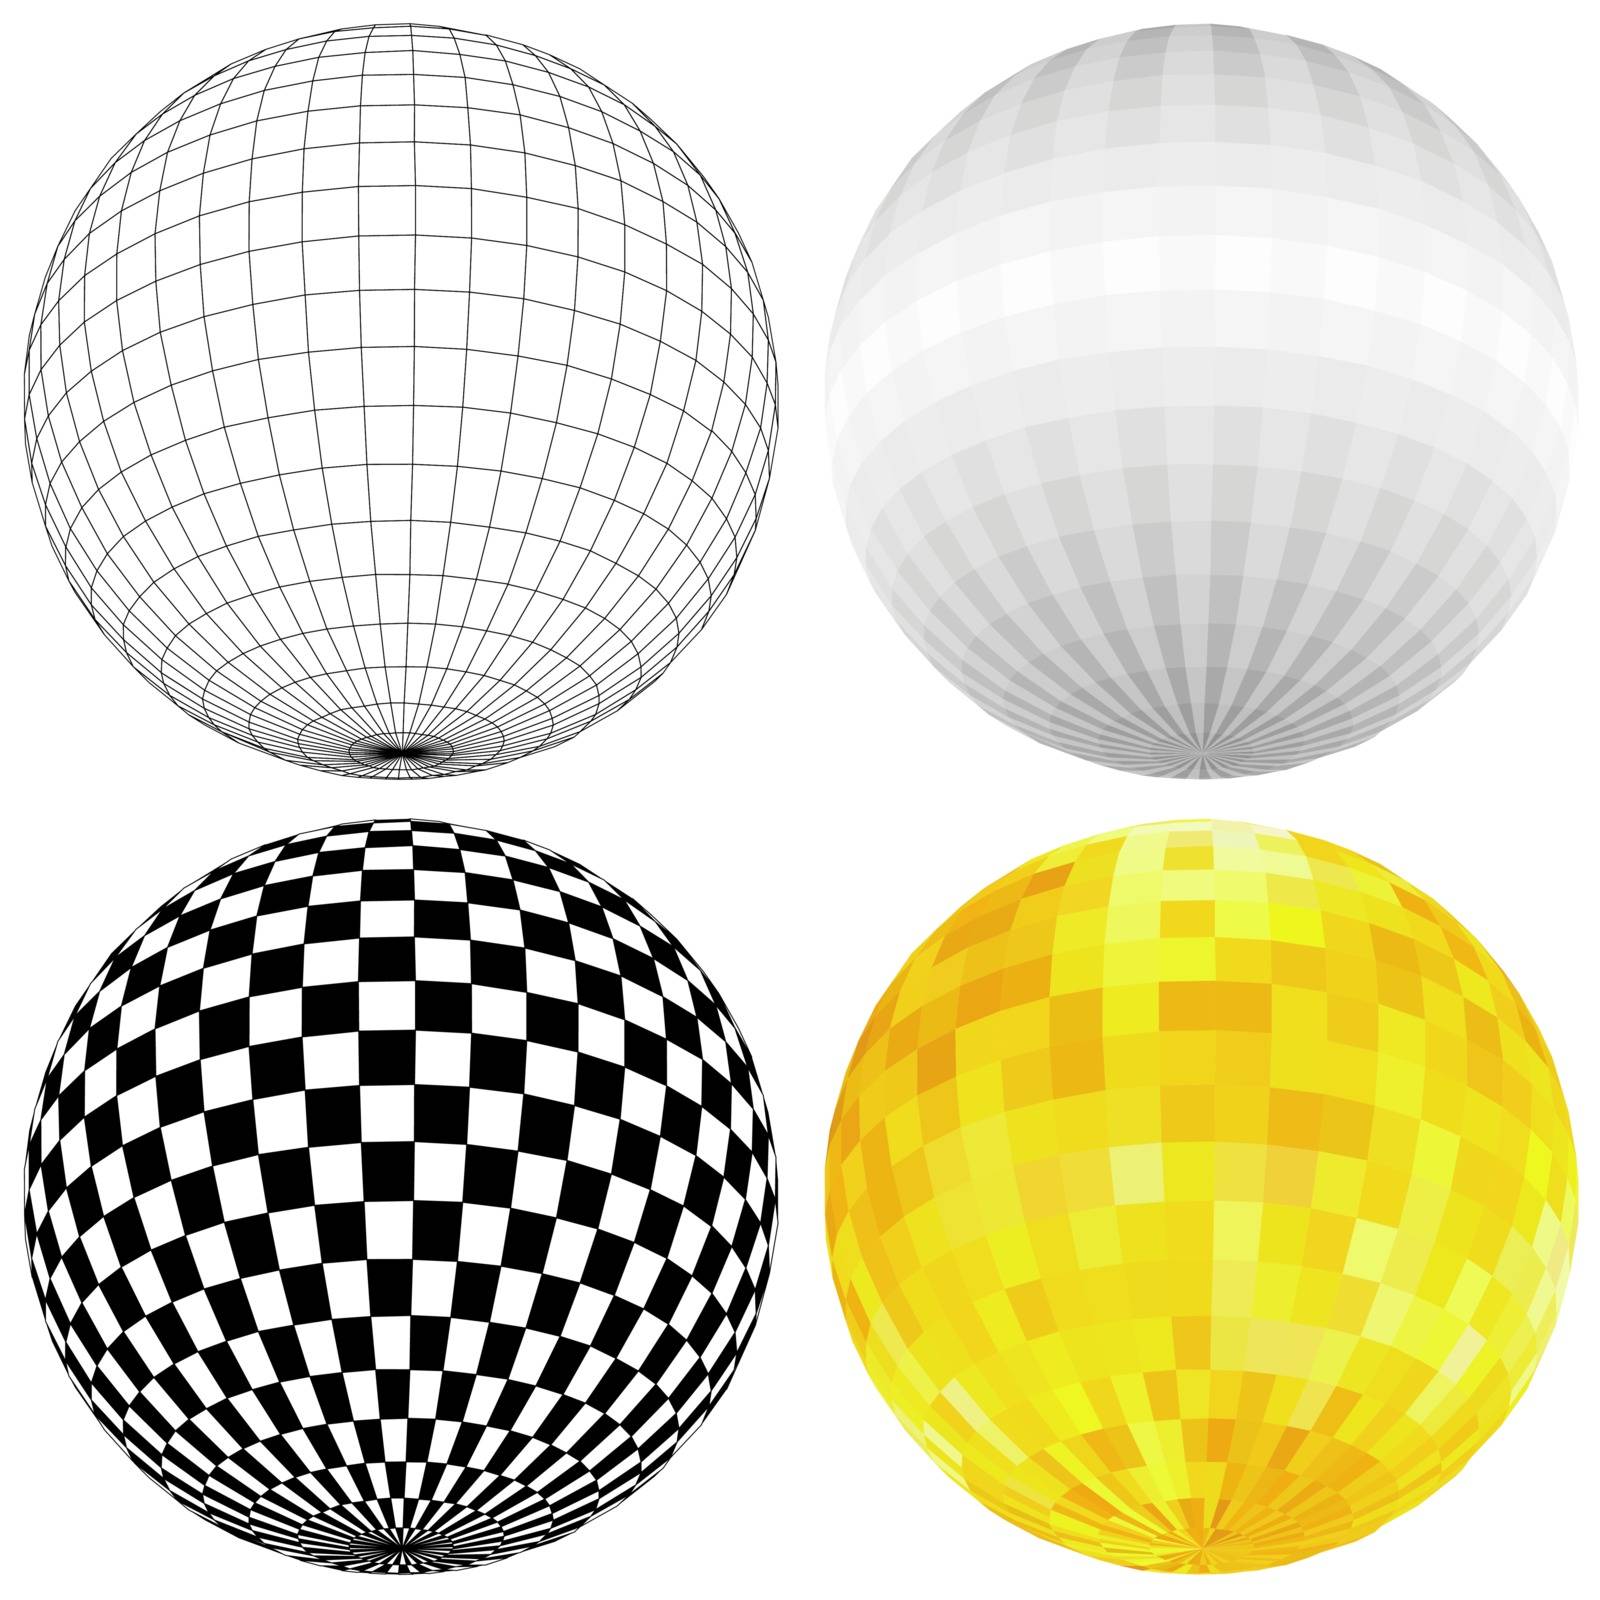 Disco Ball - Colored Illustration, Vector